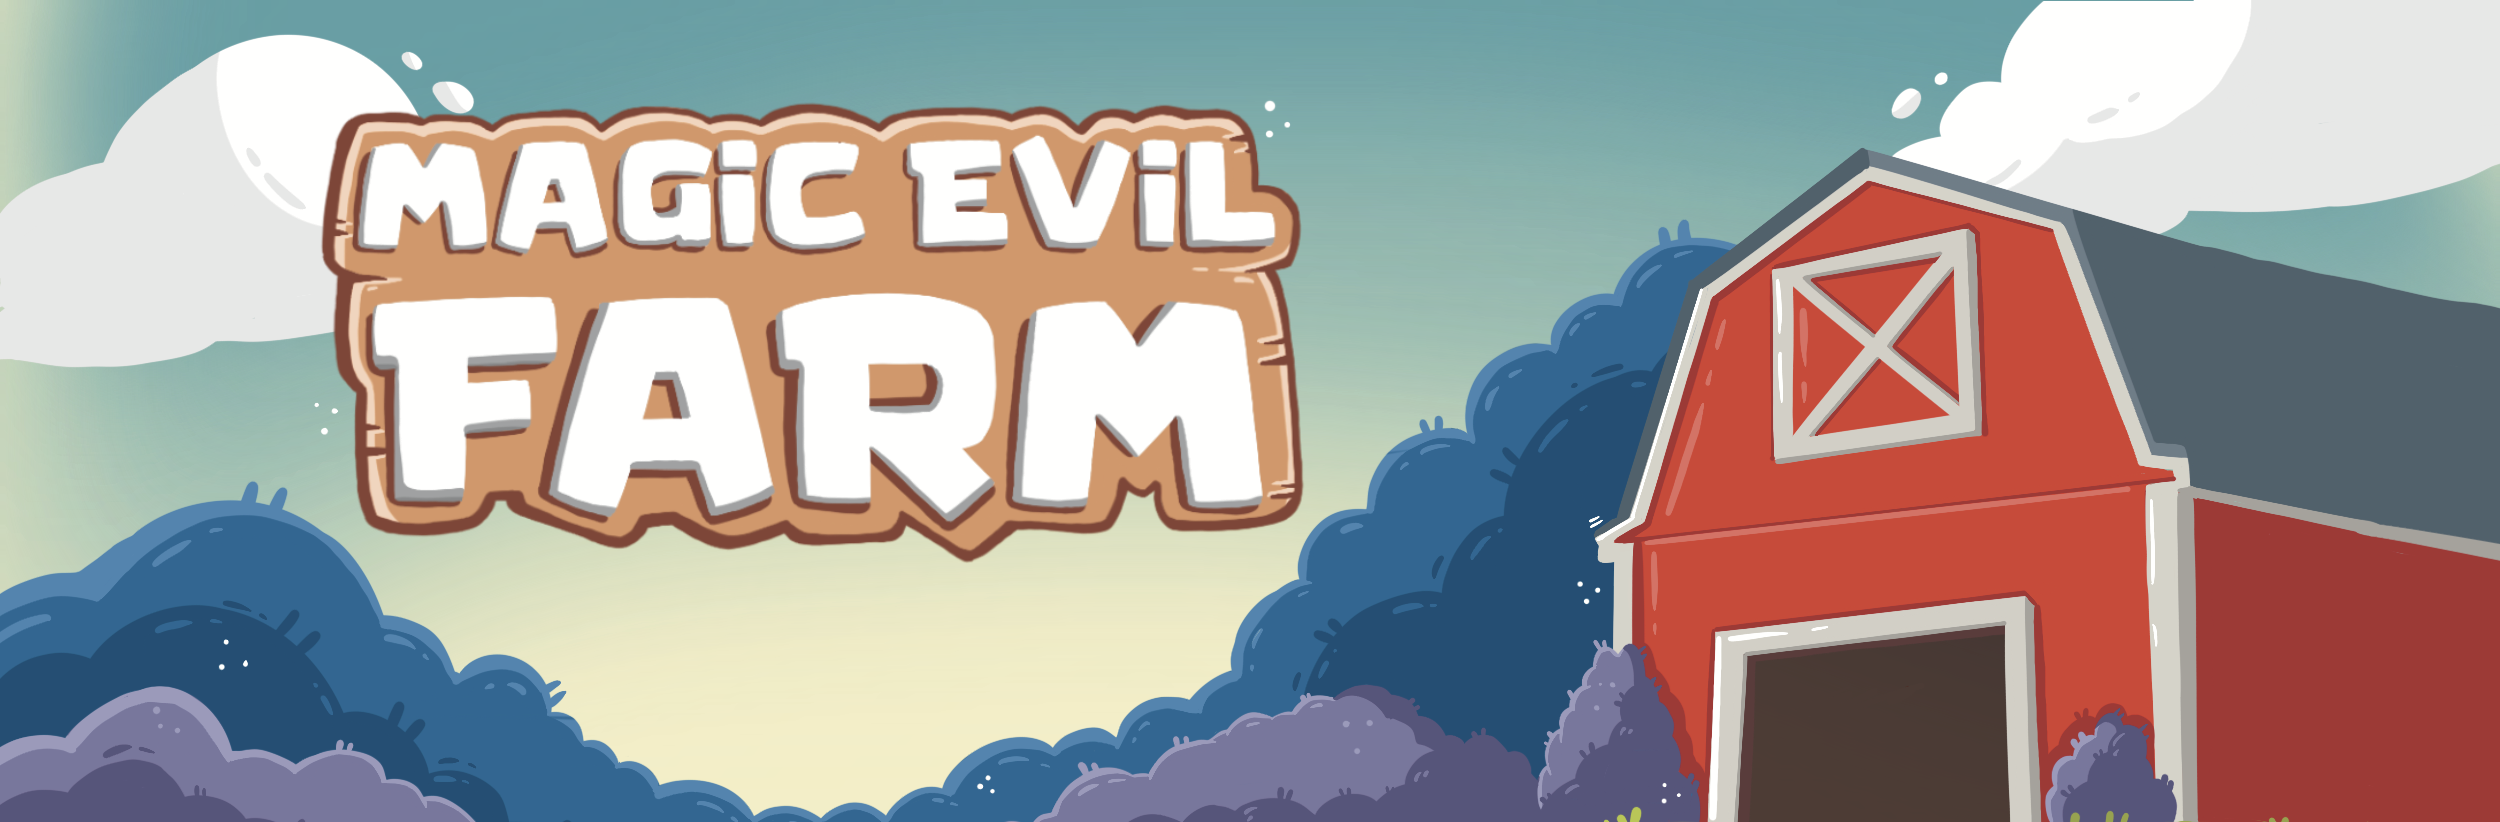 Magic Evil Farm - [DEMO]